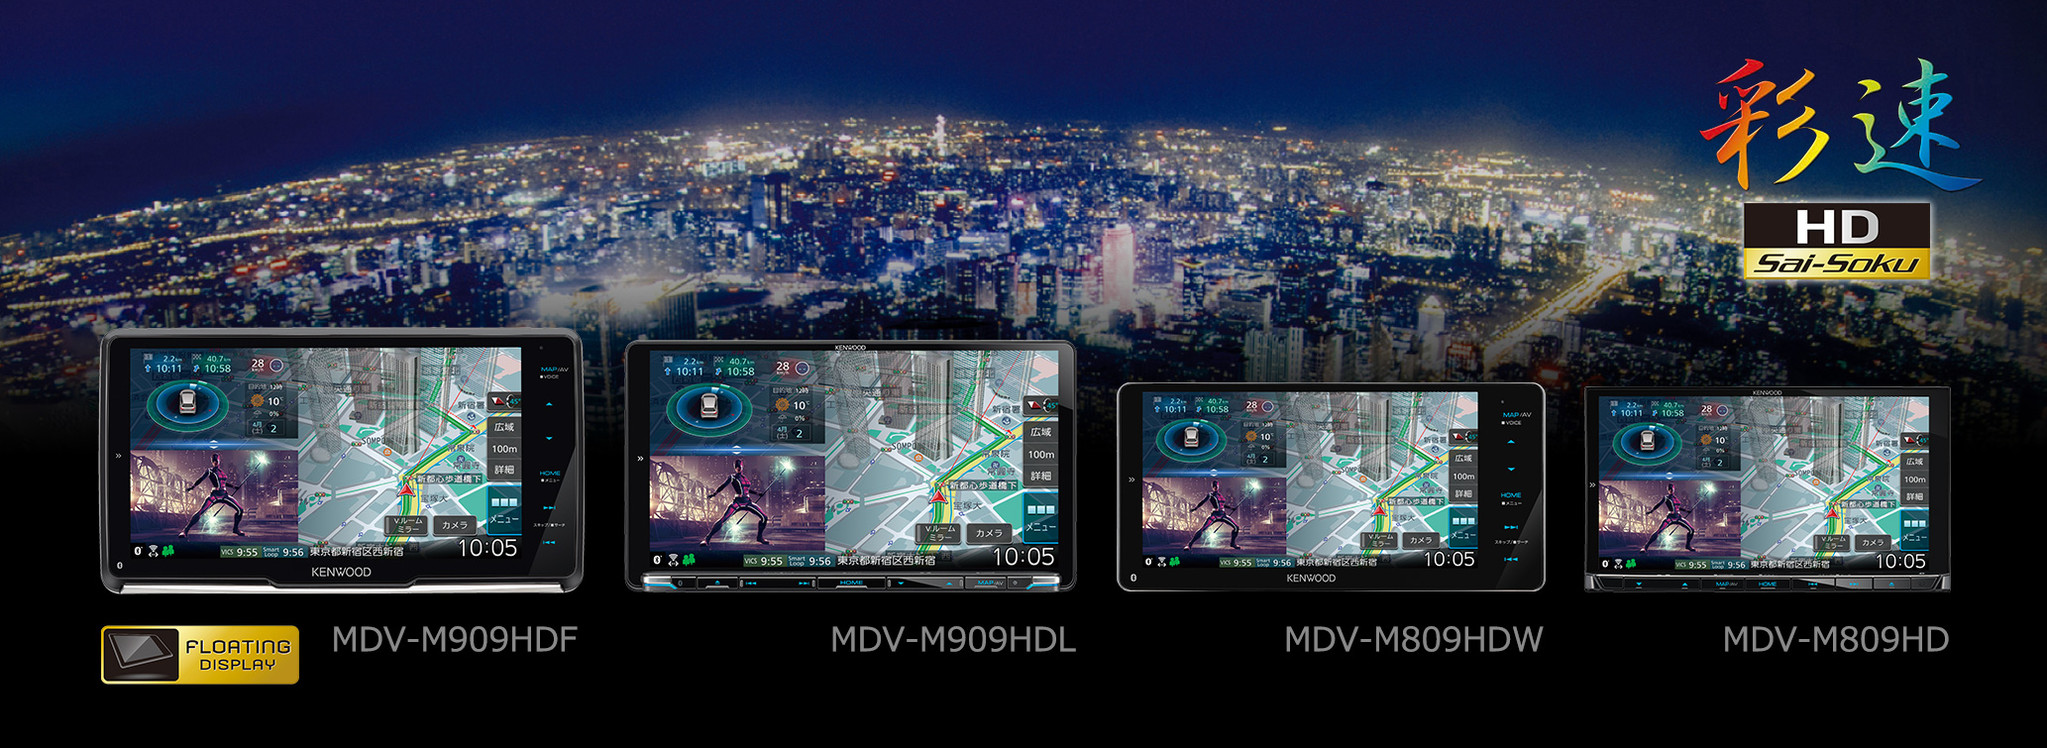 AVナビゲーションシステム“彩速ナビ”「MDV-M909HDF」ほか計4モデルを発売｜株式会社JVCケンウッドのプレスリリース